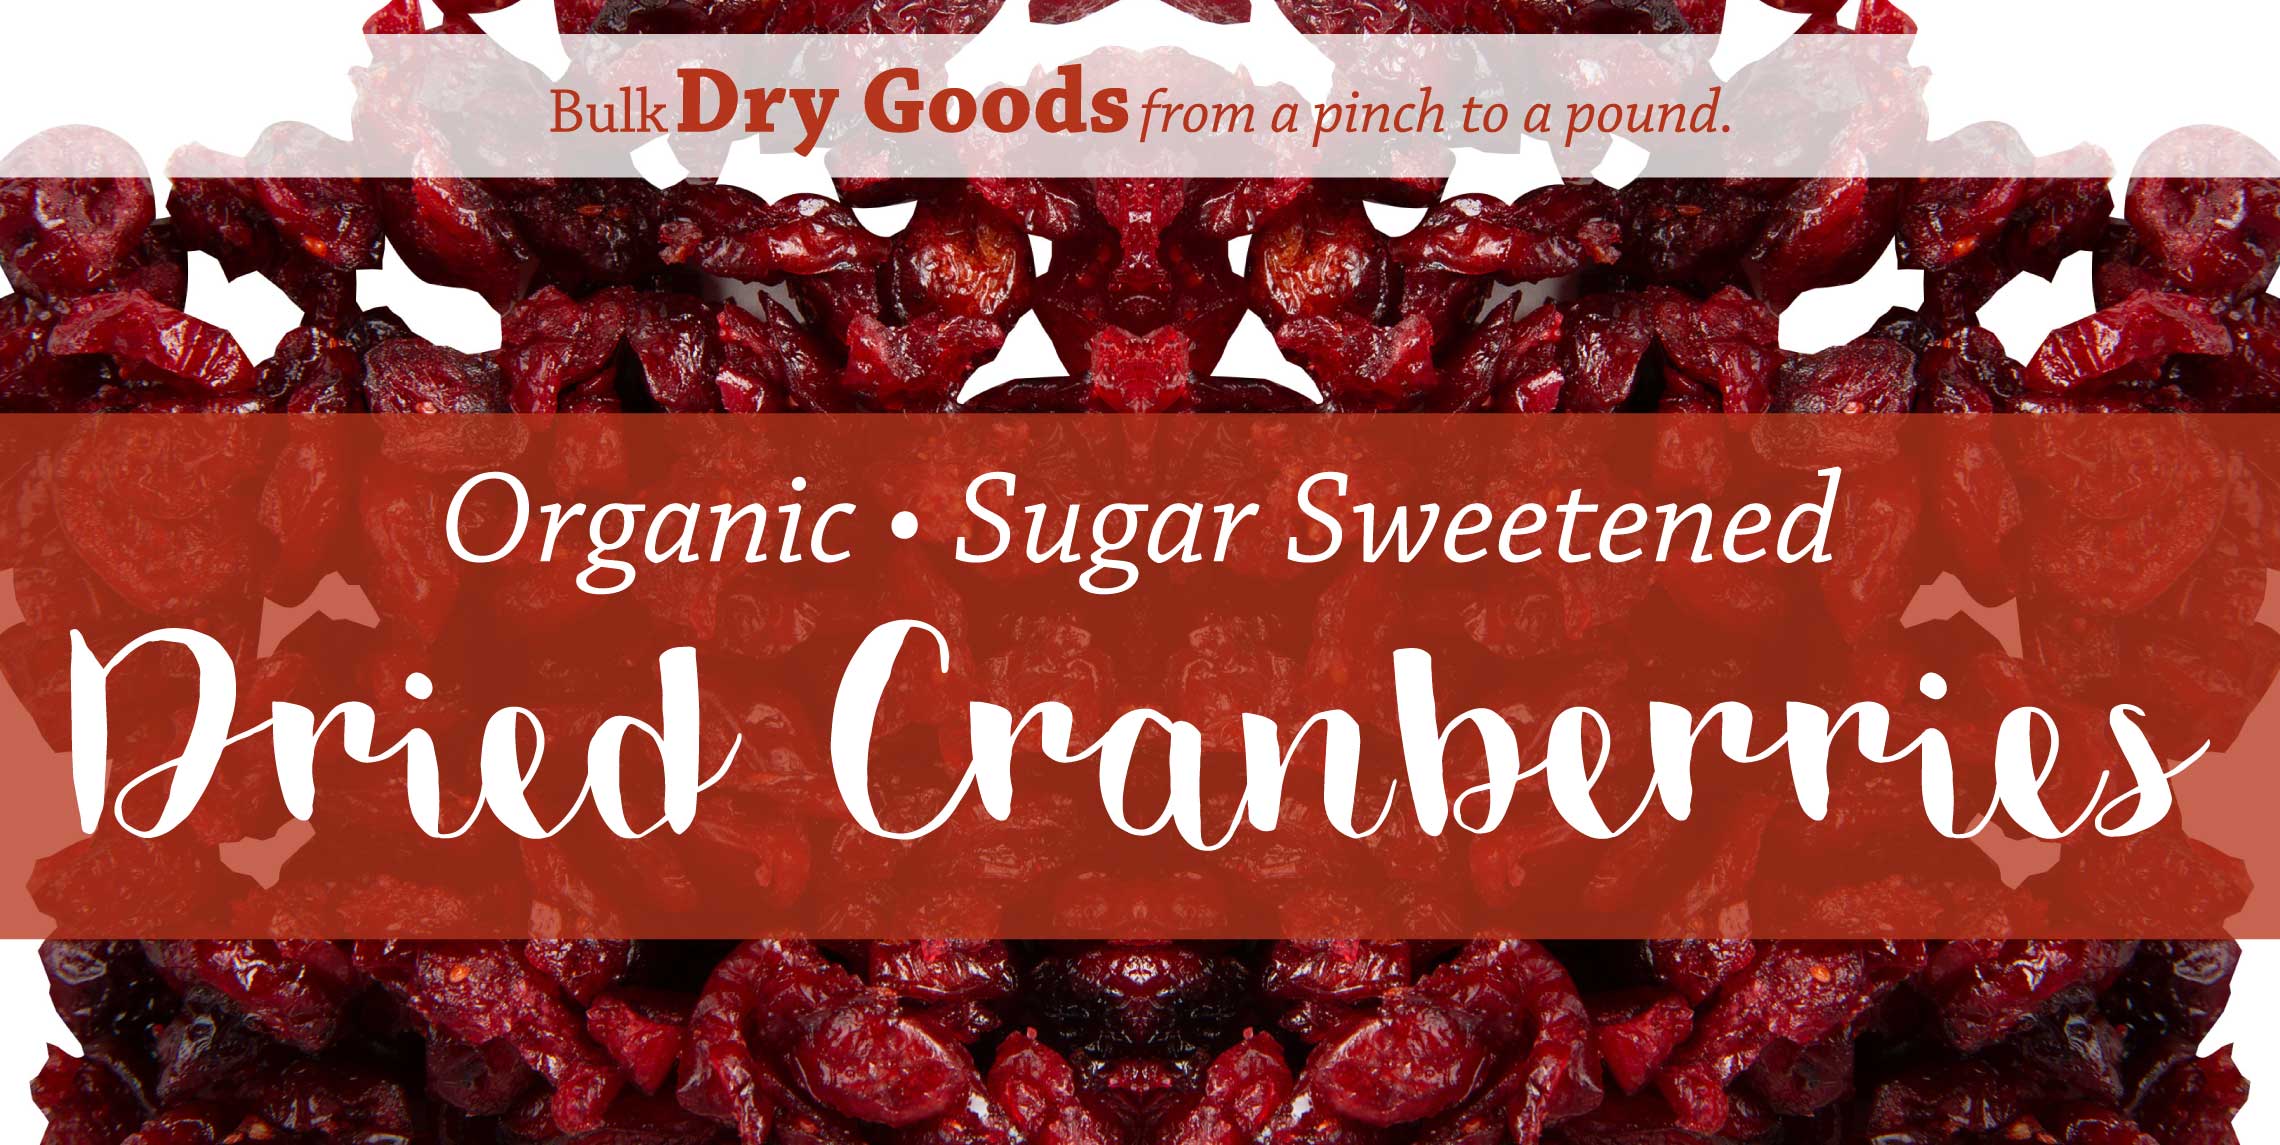 Dried Cranberries, bulk dry goods